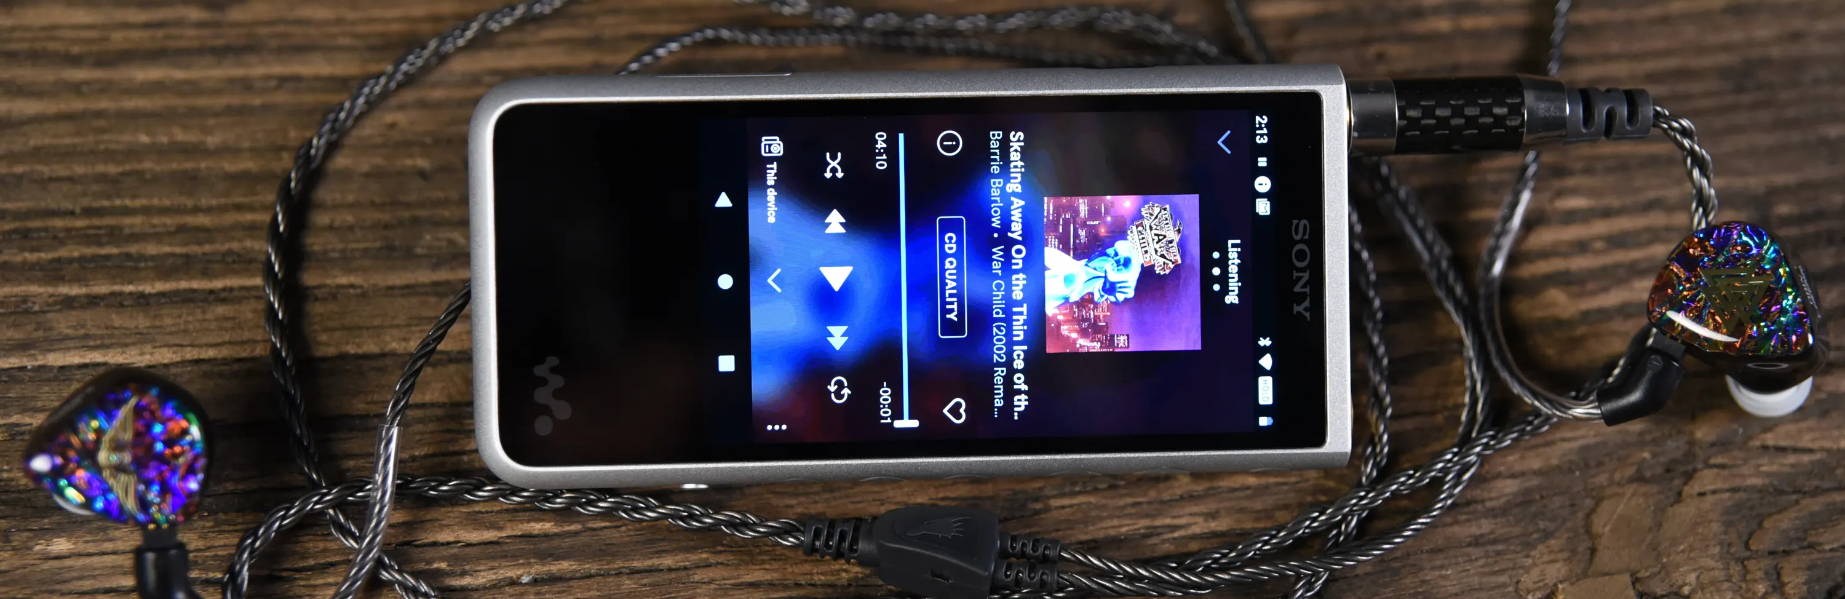 Sony NW-ZX507 Walkman Review - Moon Audio